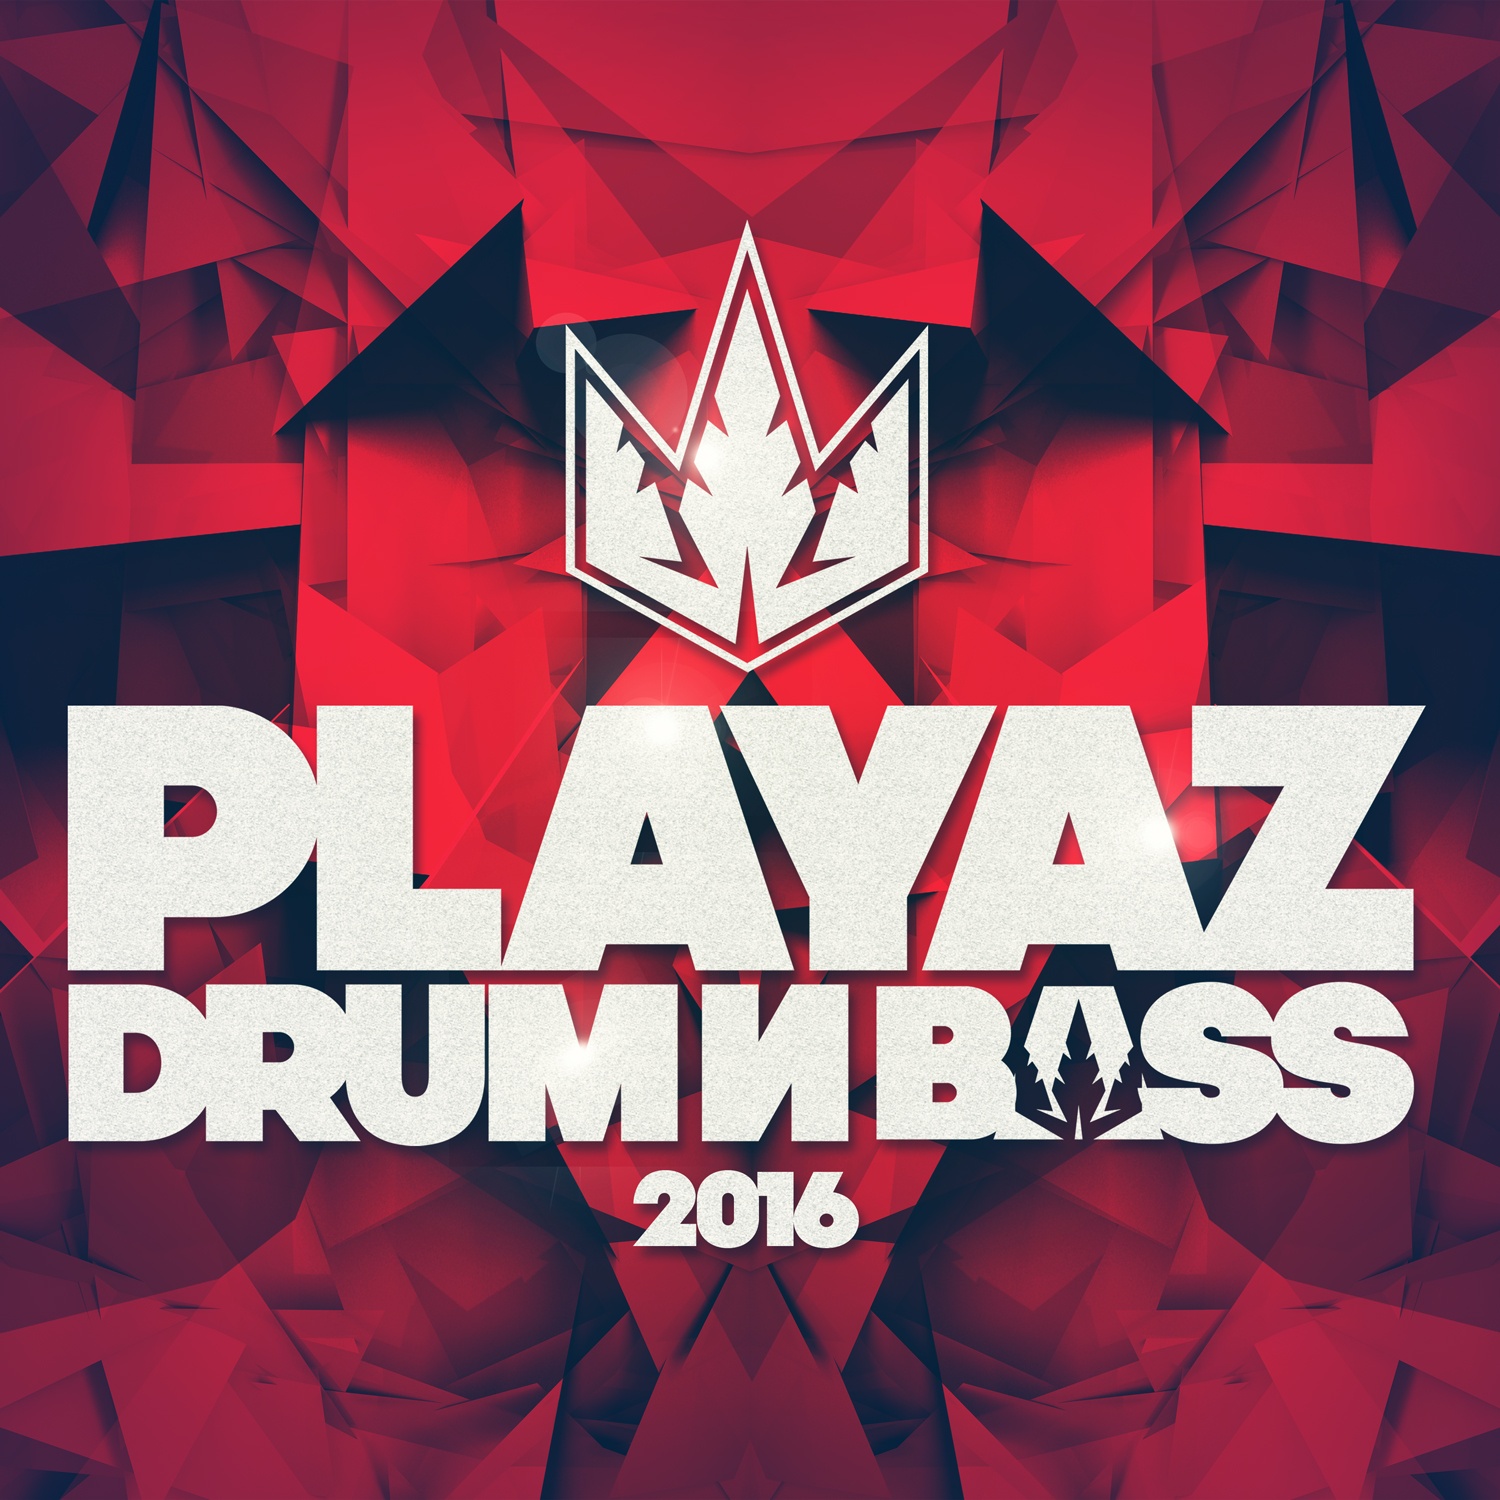 Playaz Drum&Bass 2016